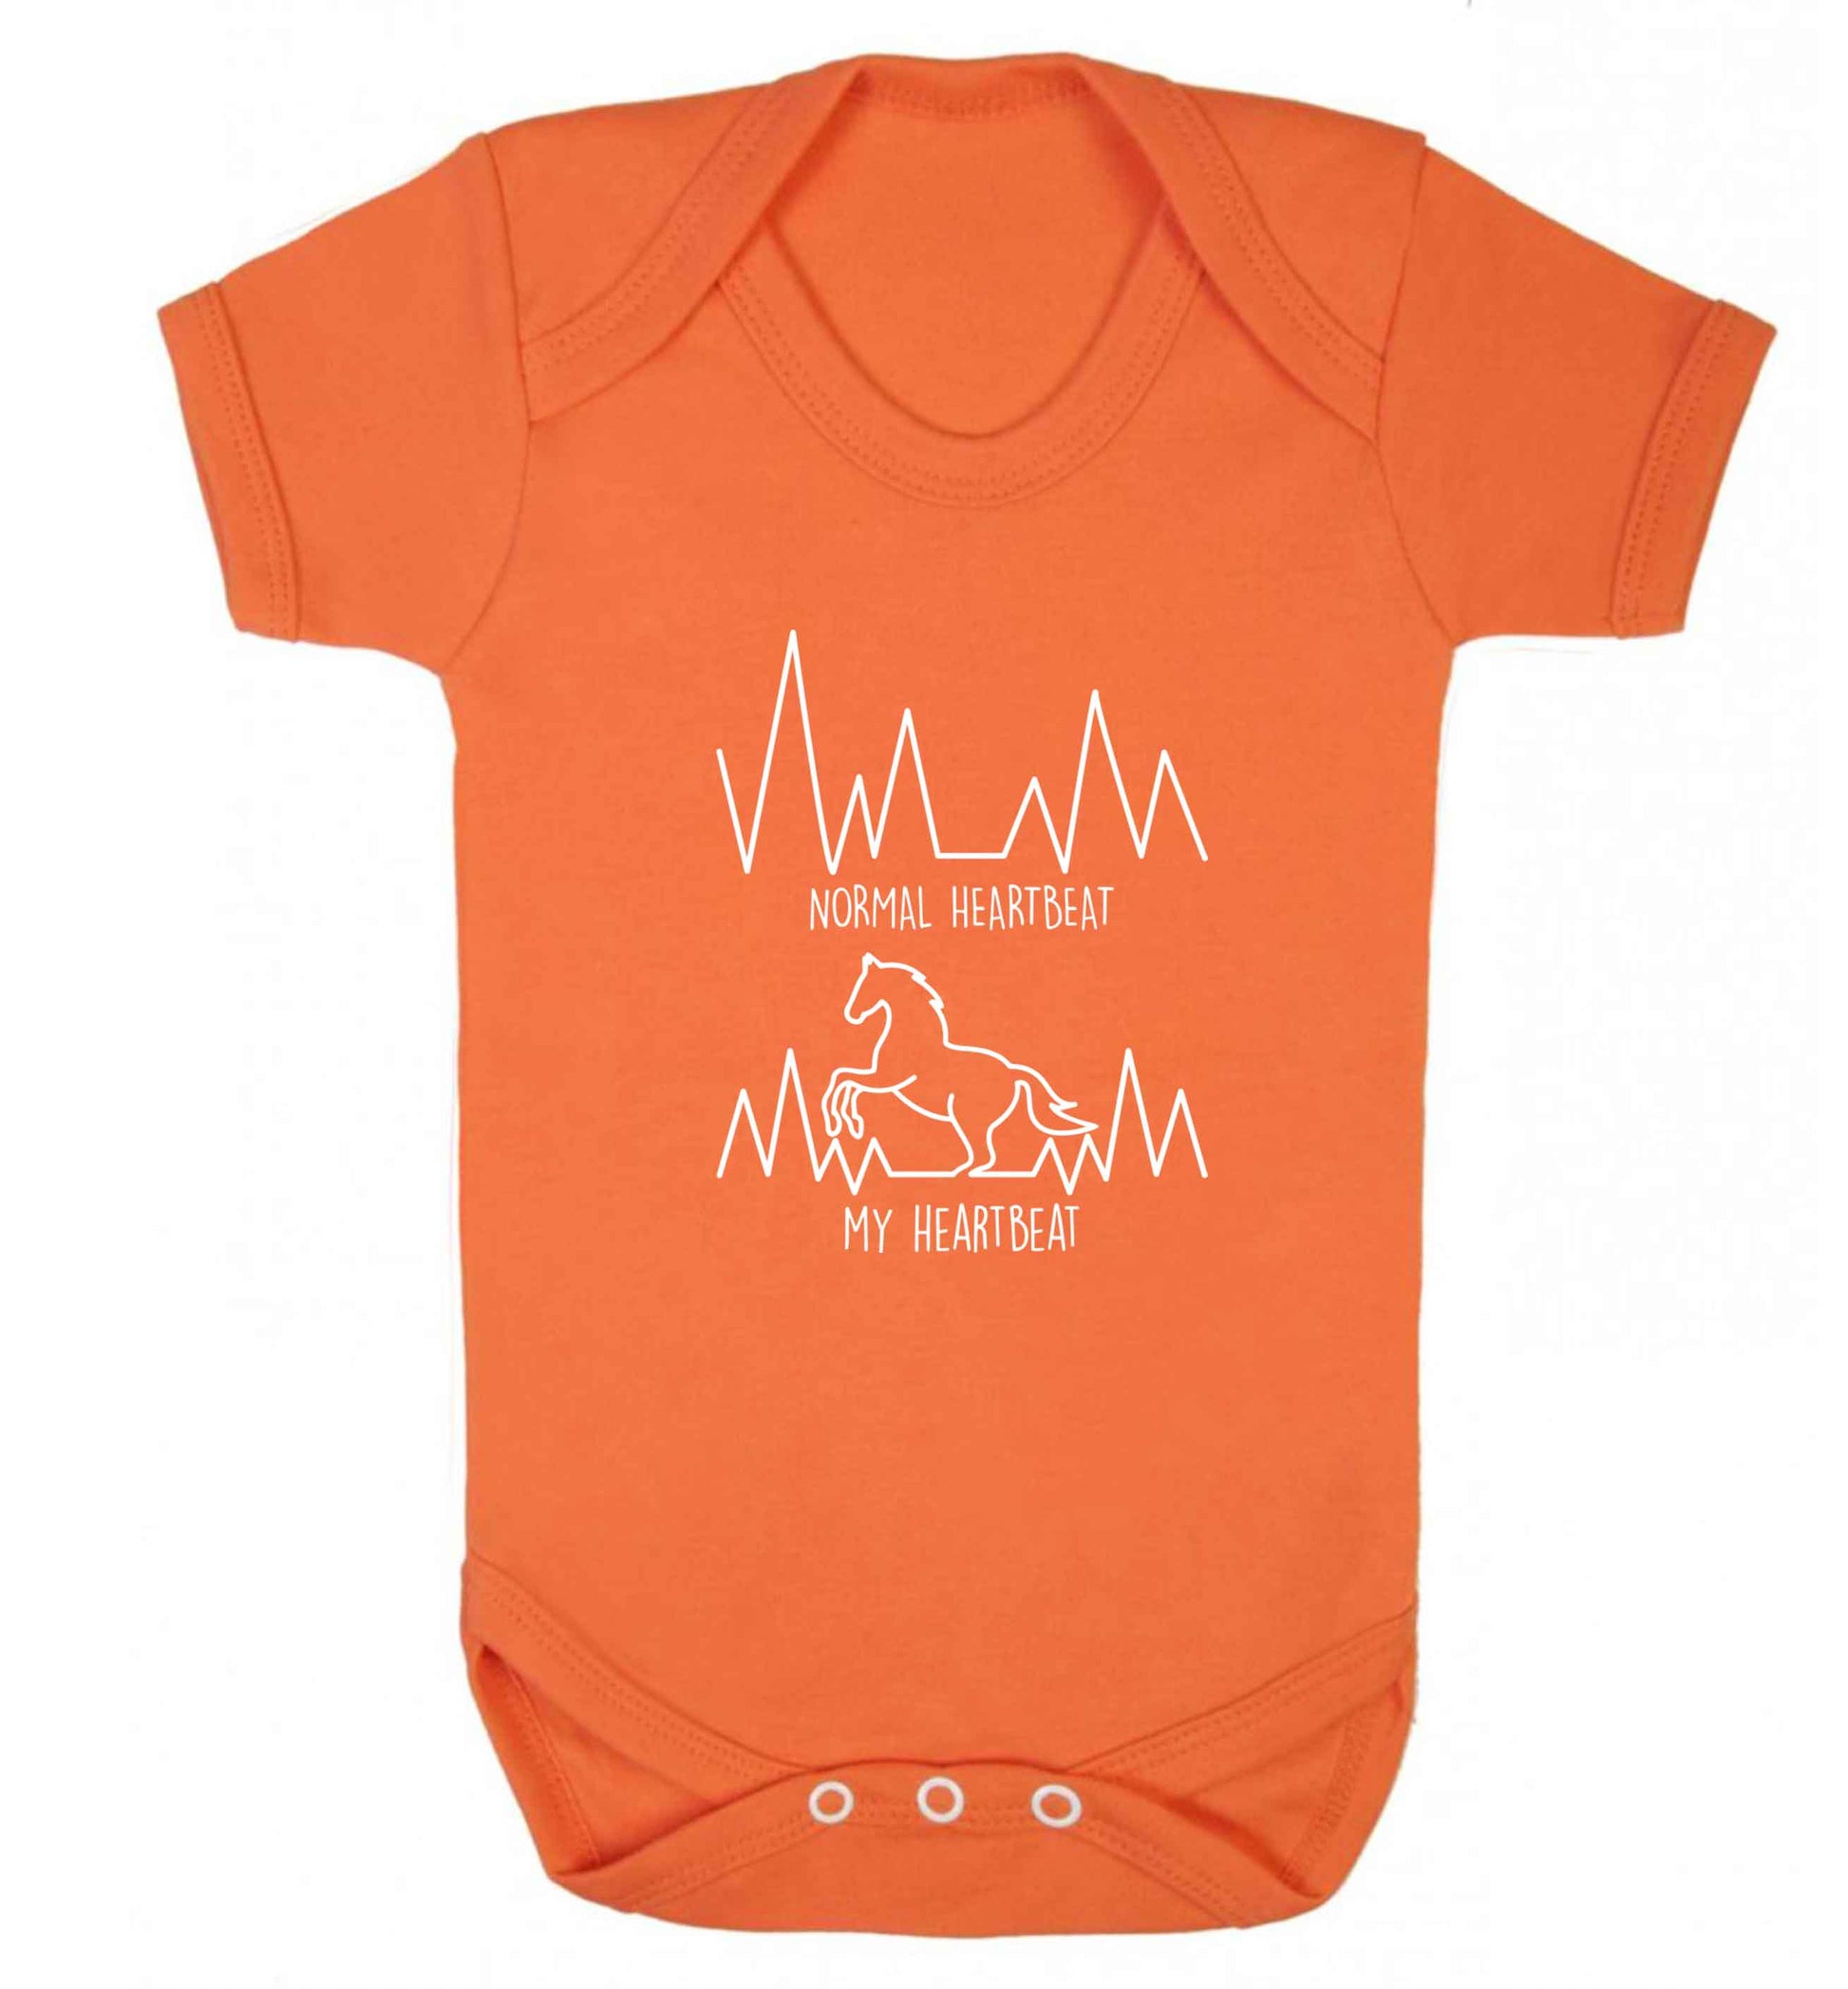 Horse - Normal heartbeat my heartbeat baby vest orange 18-24 months